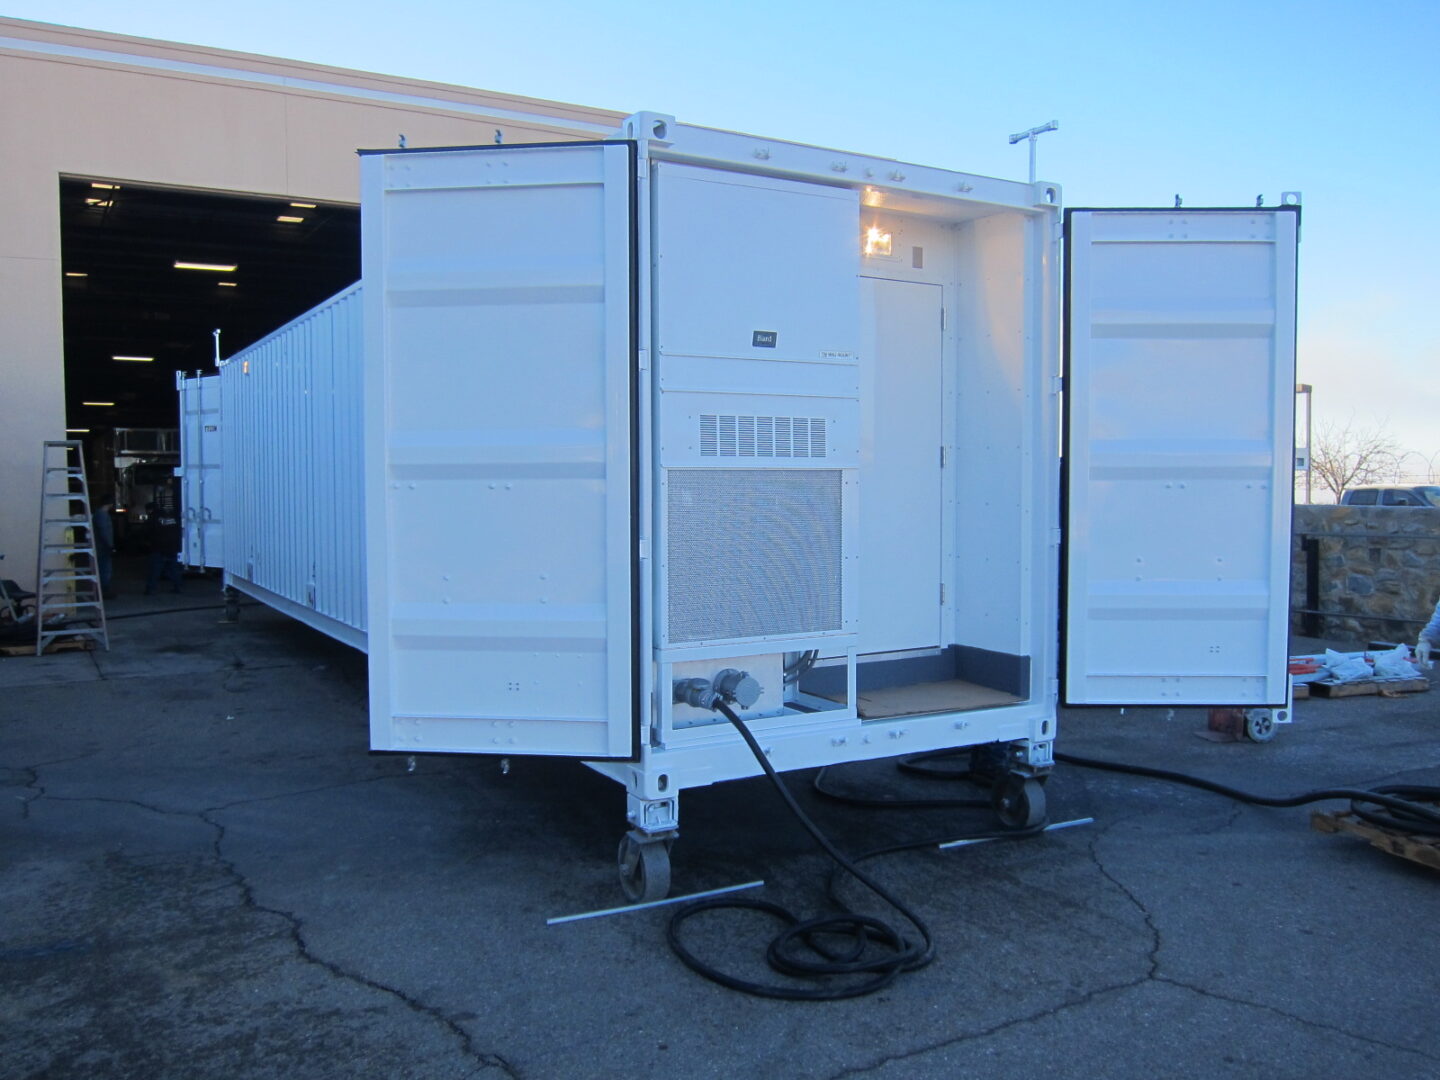 A mobile shelter under construction